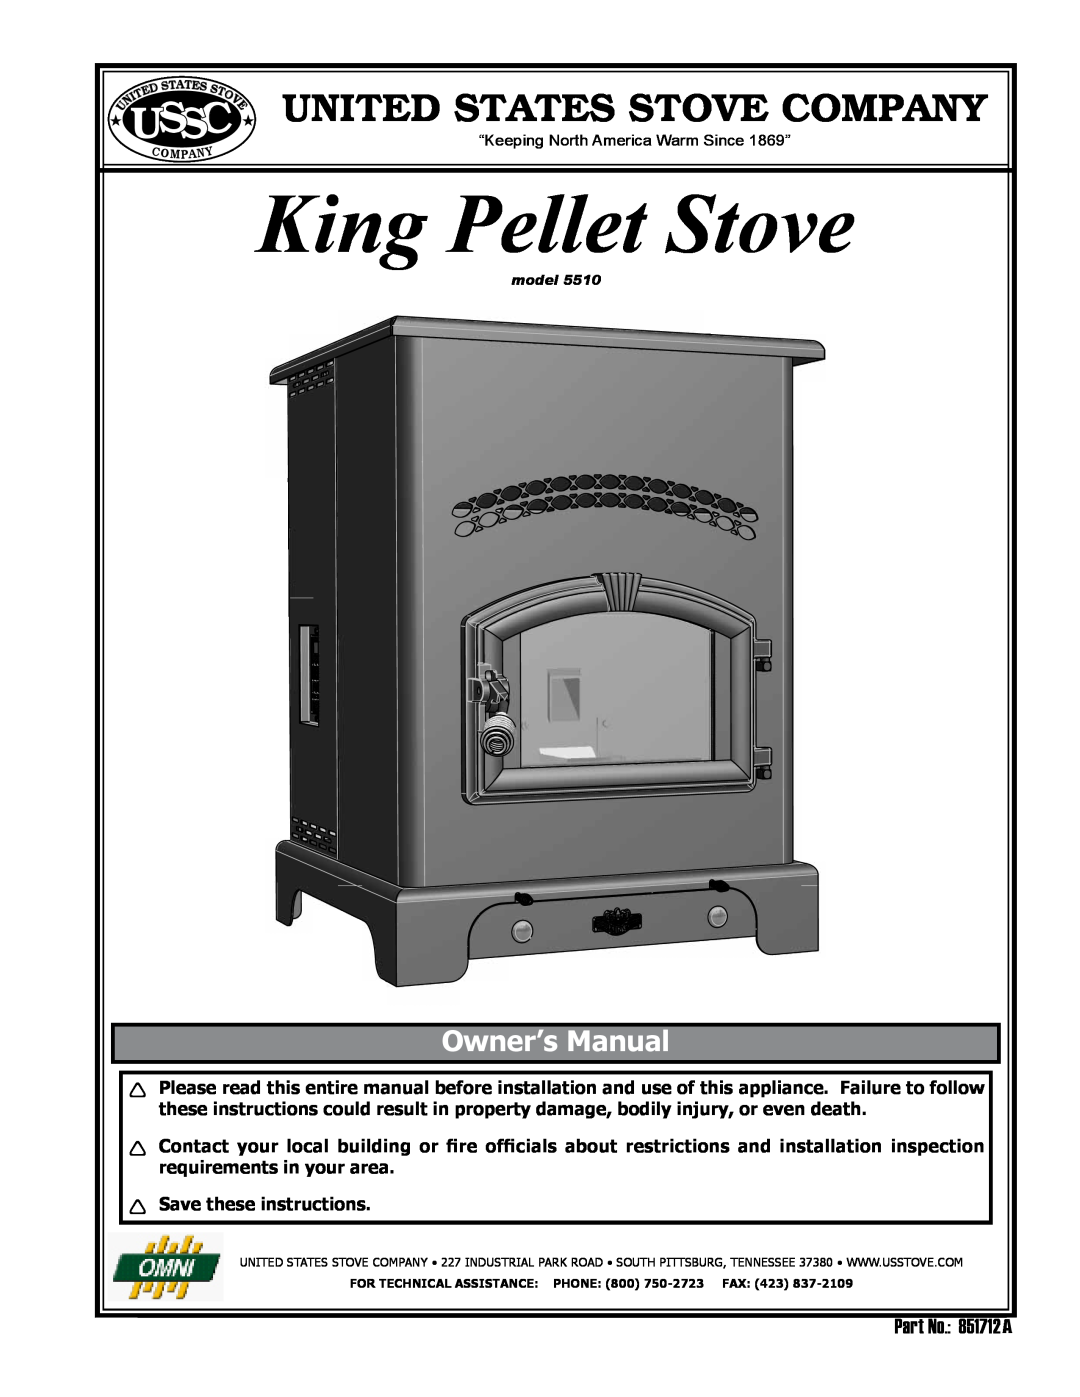 United States Stove 5510 owner manual King Pellet Stove, Ussc, United States Stove Company, Part No. 851712 A1, model 